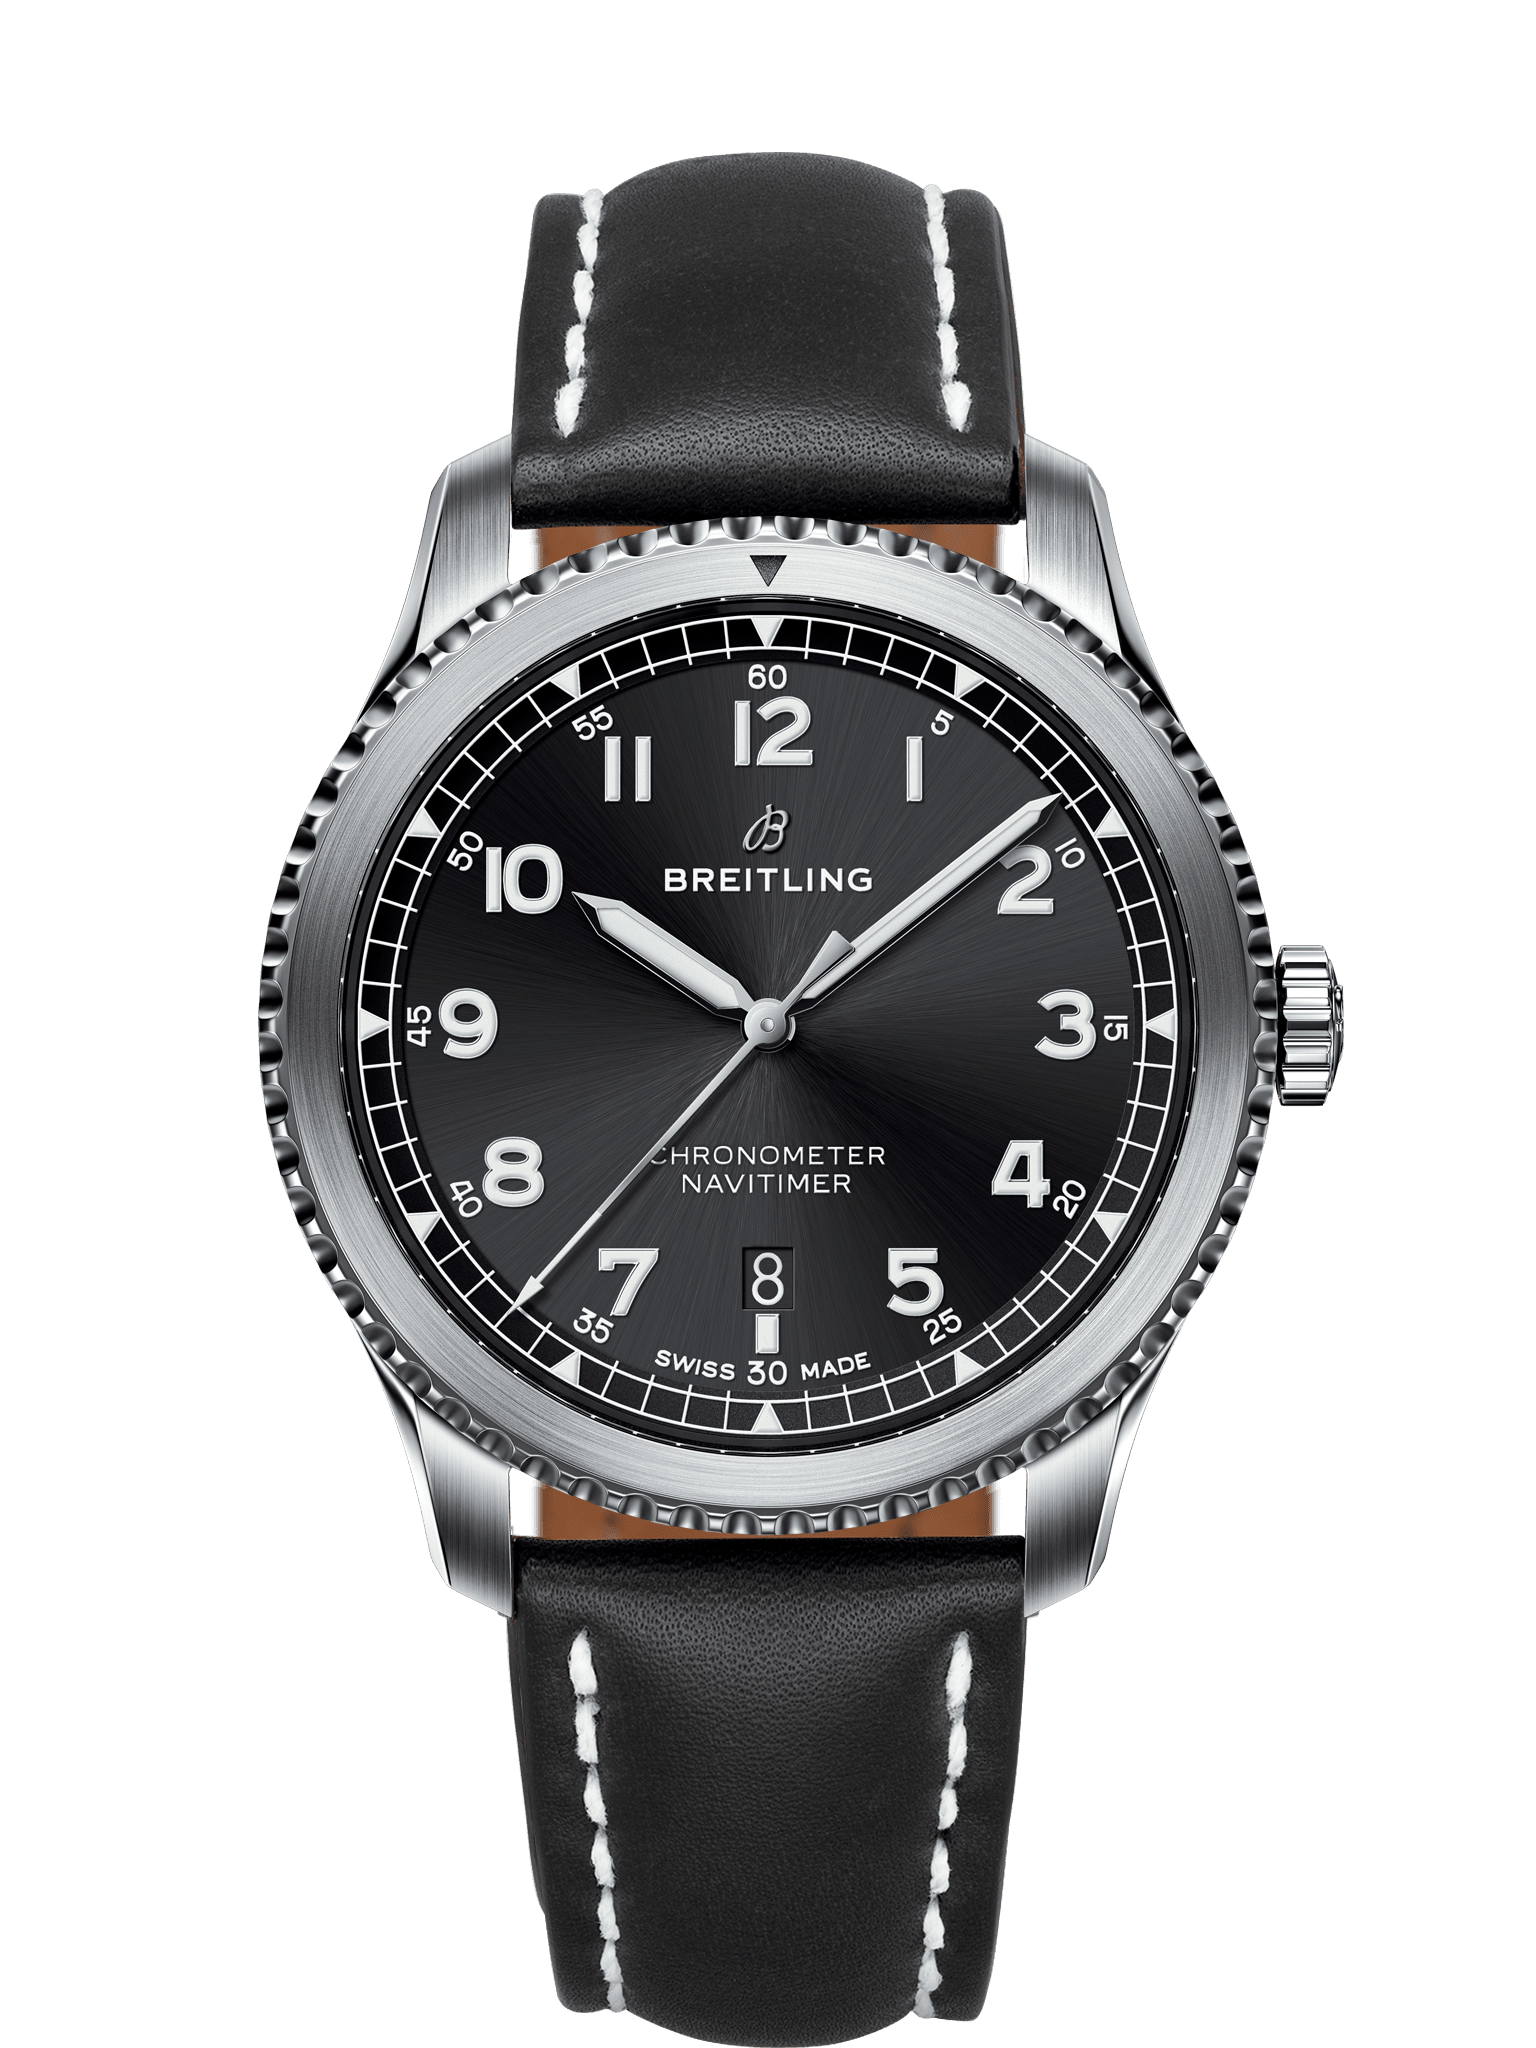 Breitling Avengers Seawolf A73390breitling Avengers Seawolf A73390 45.5 mm stainless steel men's watch